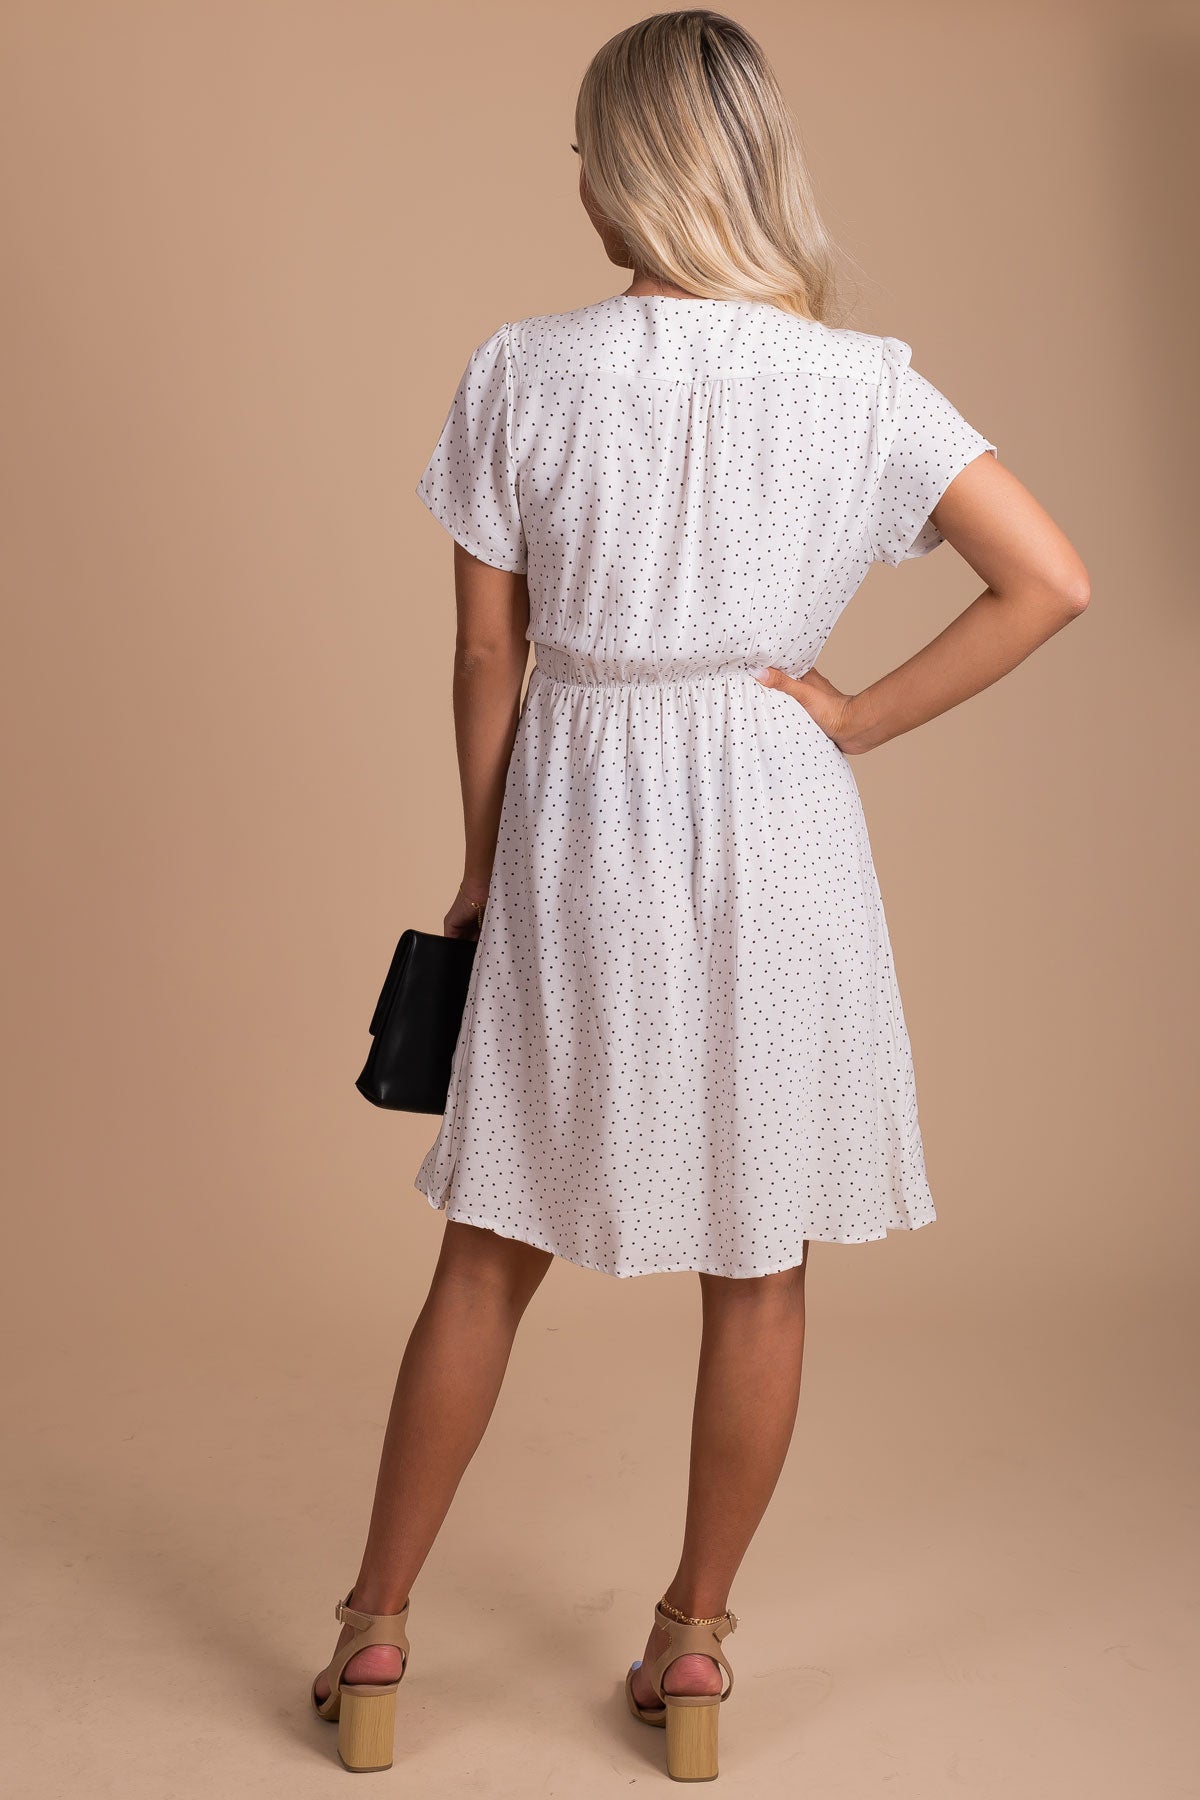 White Cute and Comfortable Boutique Mini Dresses for Women